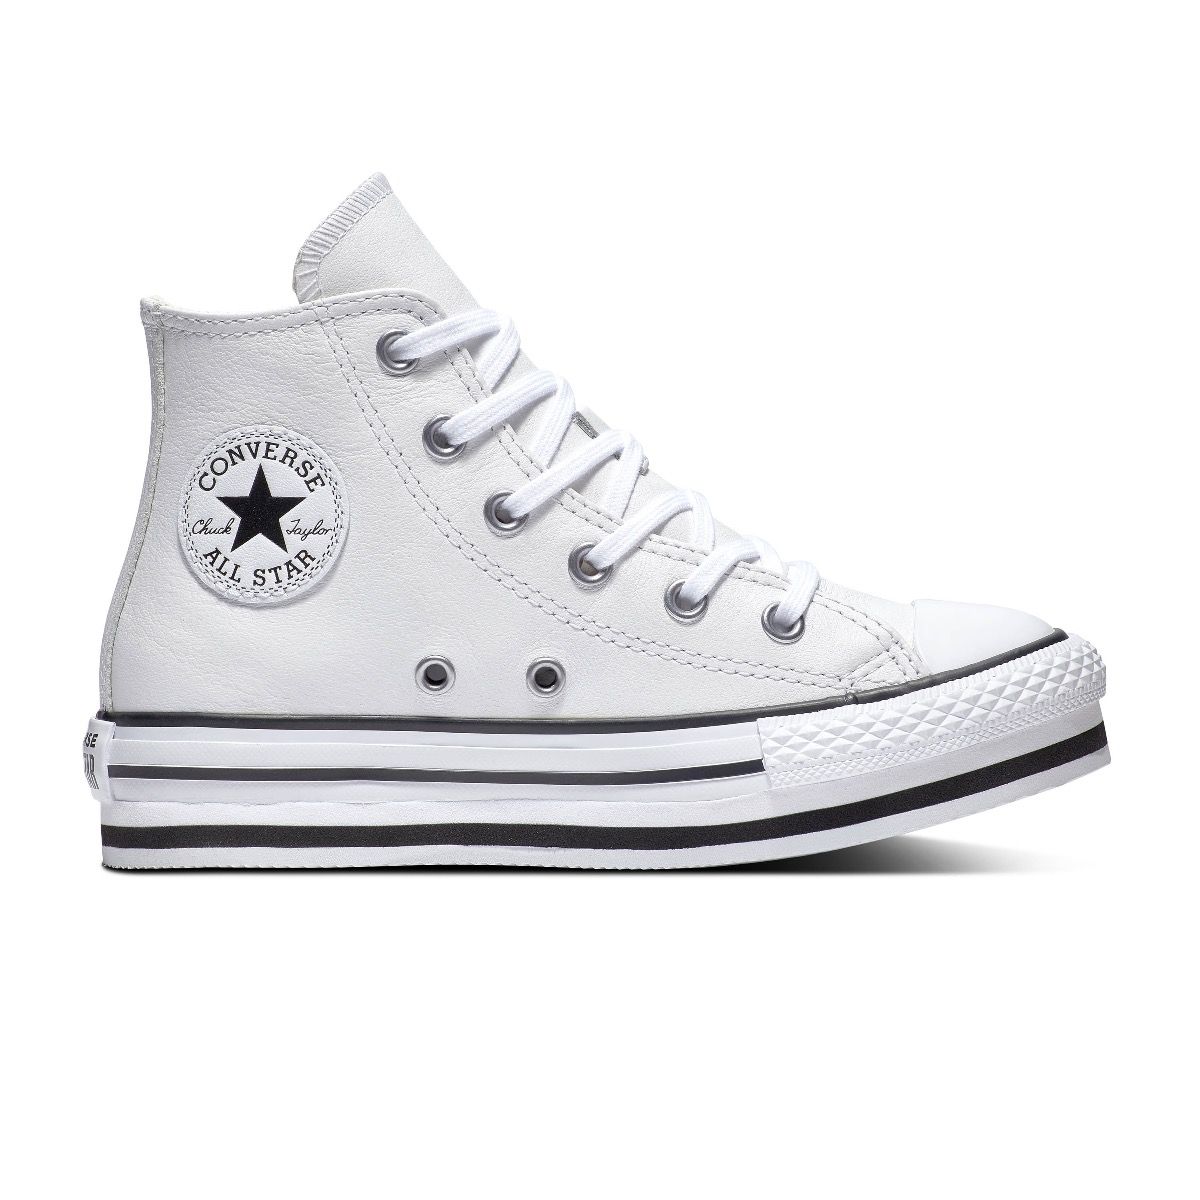 Converse Chuck Taylor All Star Platform EVA Hi leren sneakers met plateauzool wit-zwart